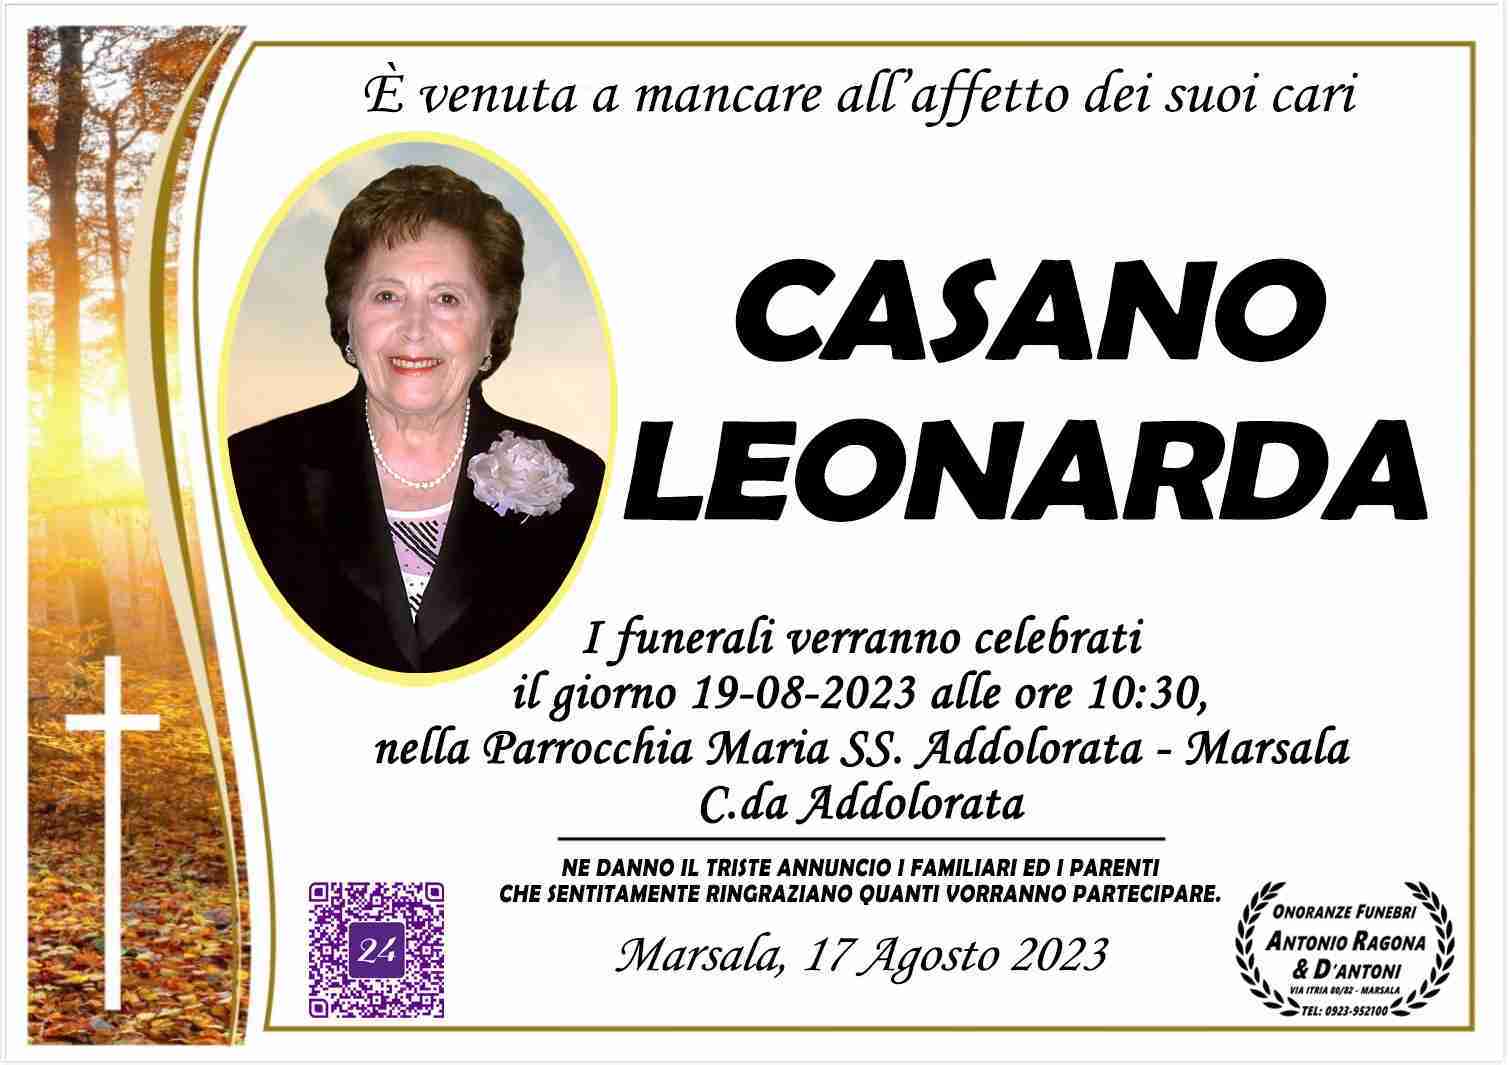 Leonarda Casano